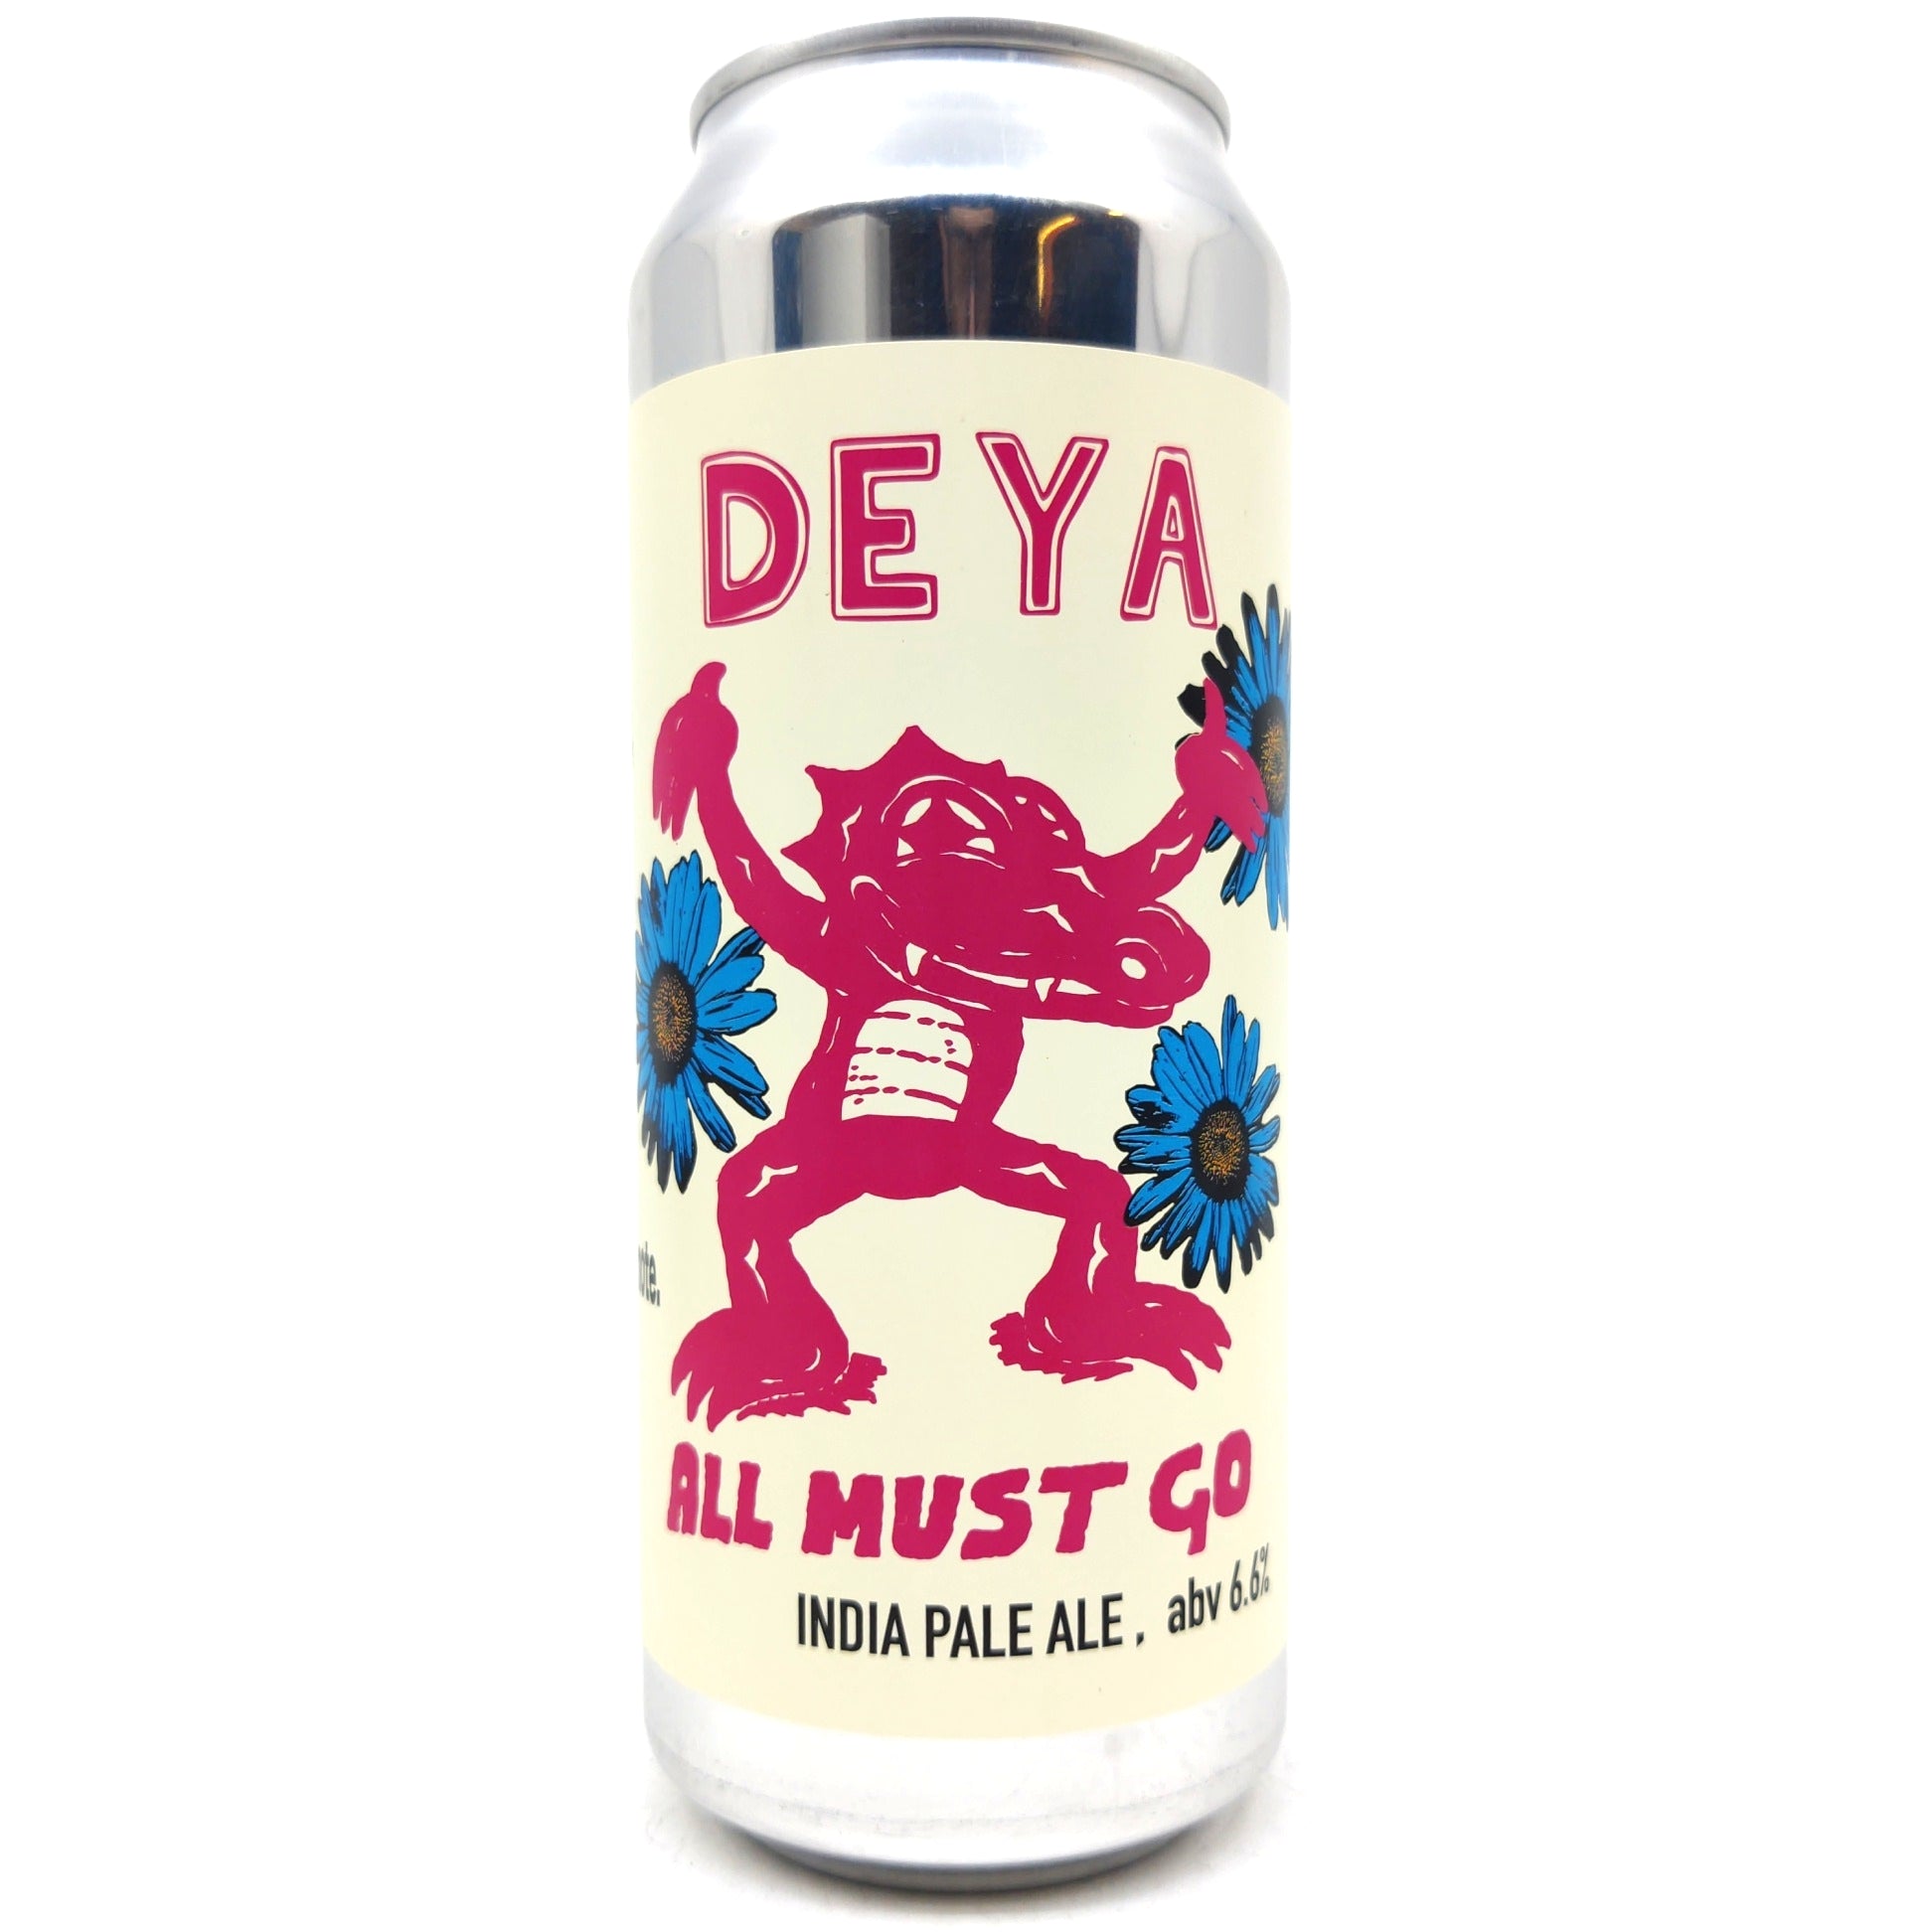 DEYA All Must Go IPA 6.6% (500ml can)-Hop Burns & Black